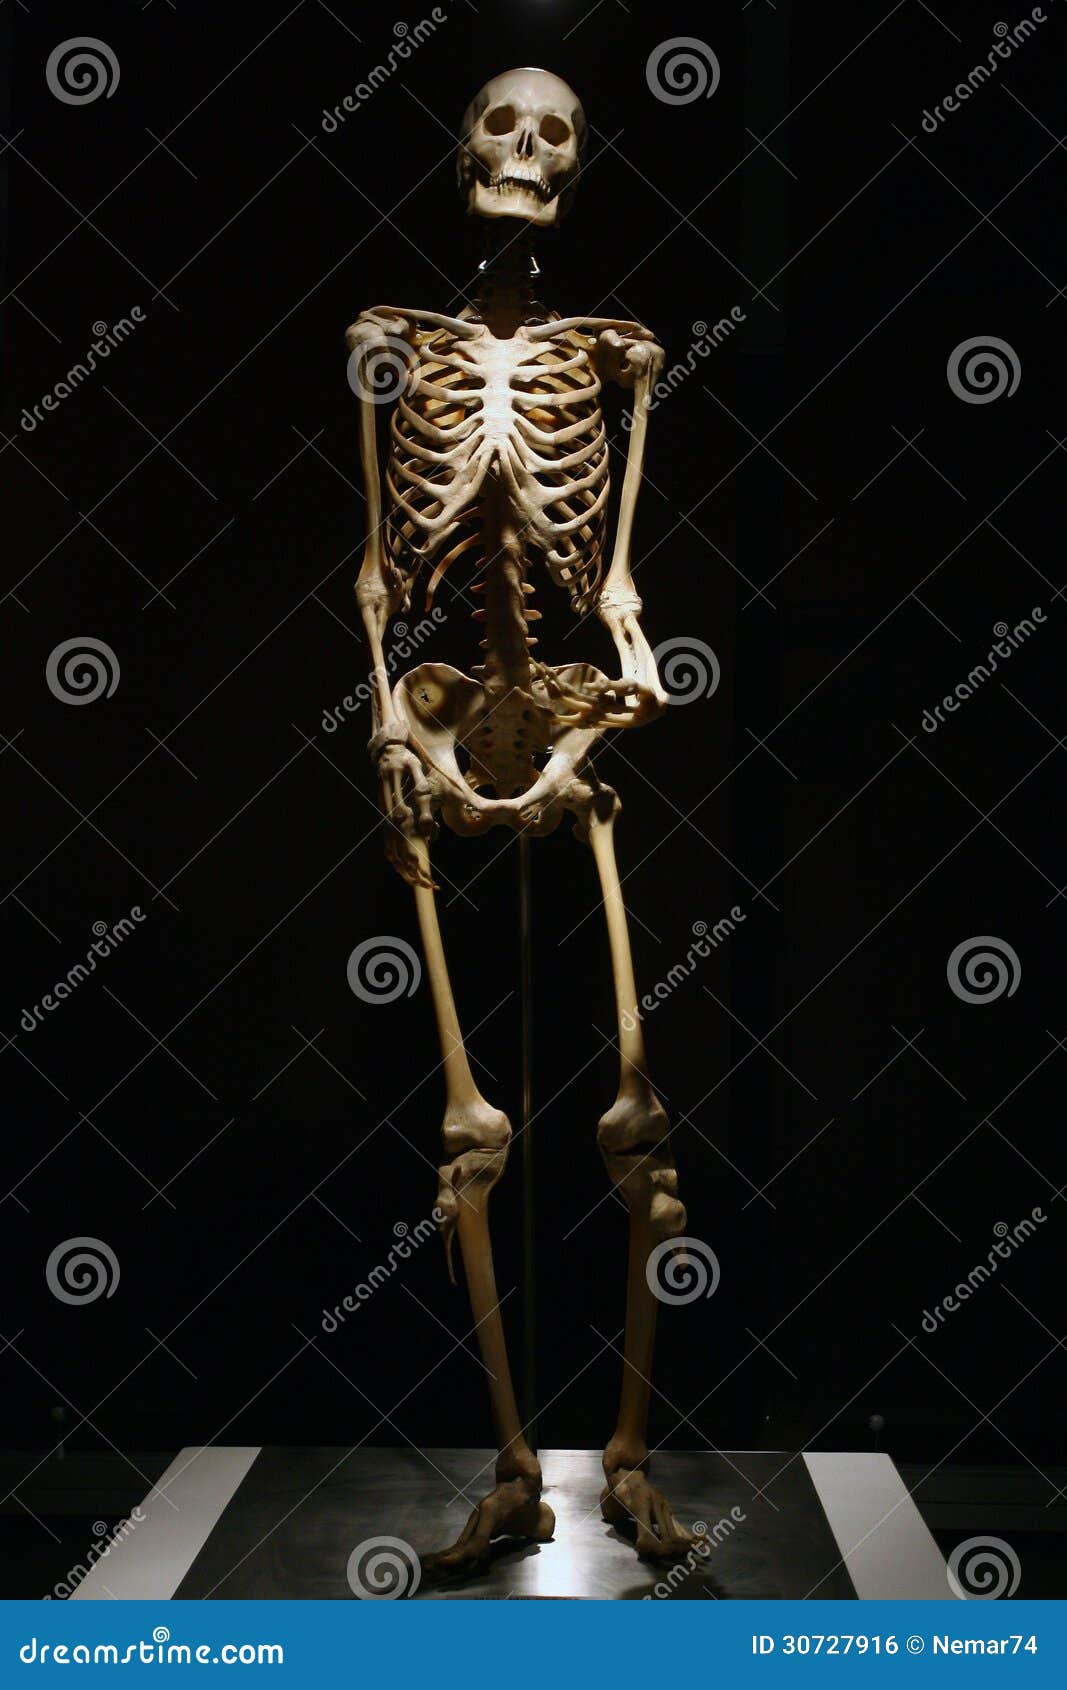 Human Anatomy Real Skeleton Royalty Free Stock Image - Image: 30727916